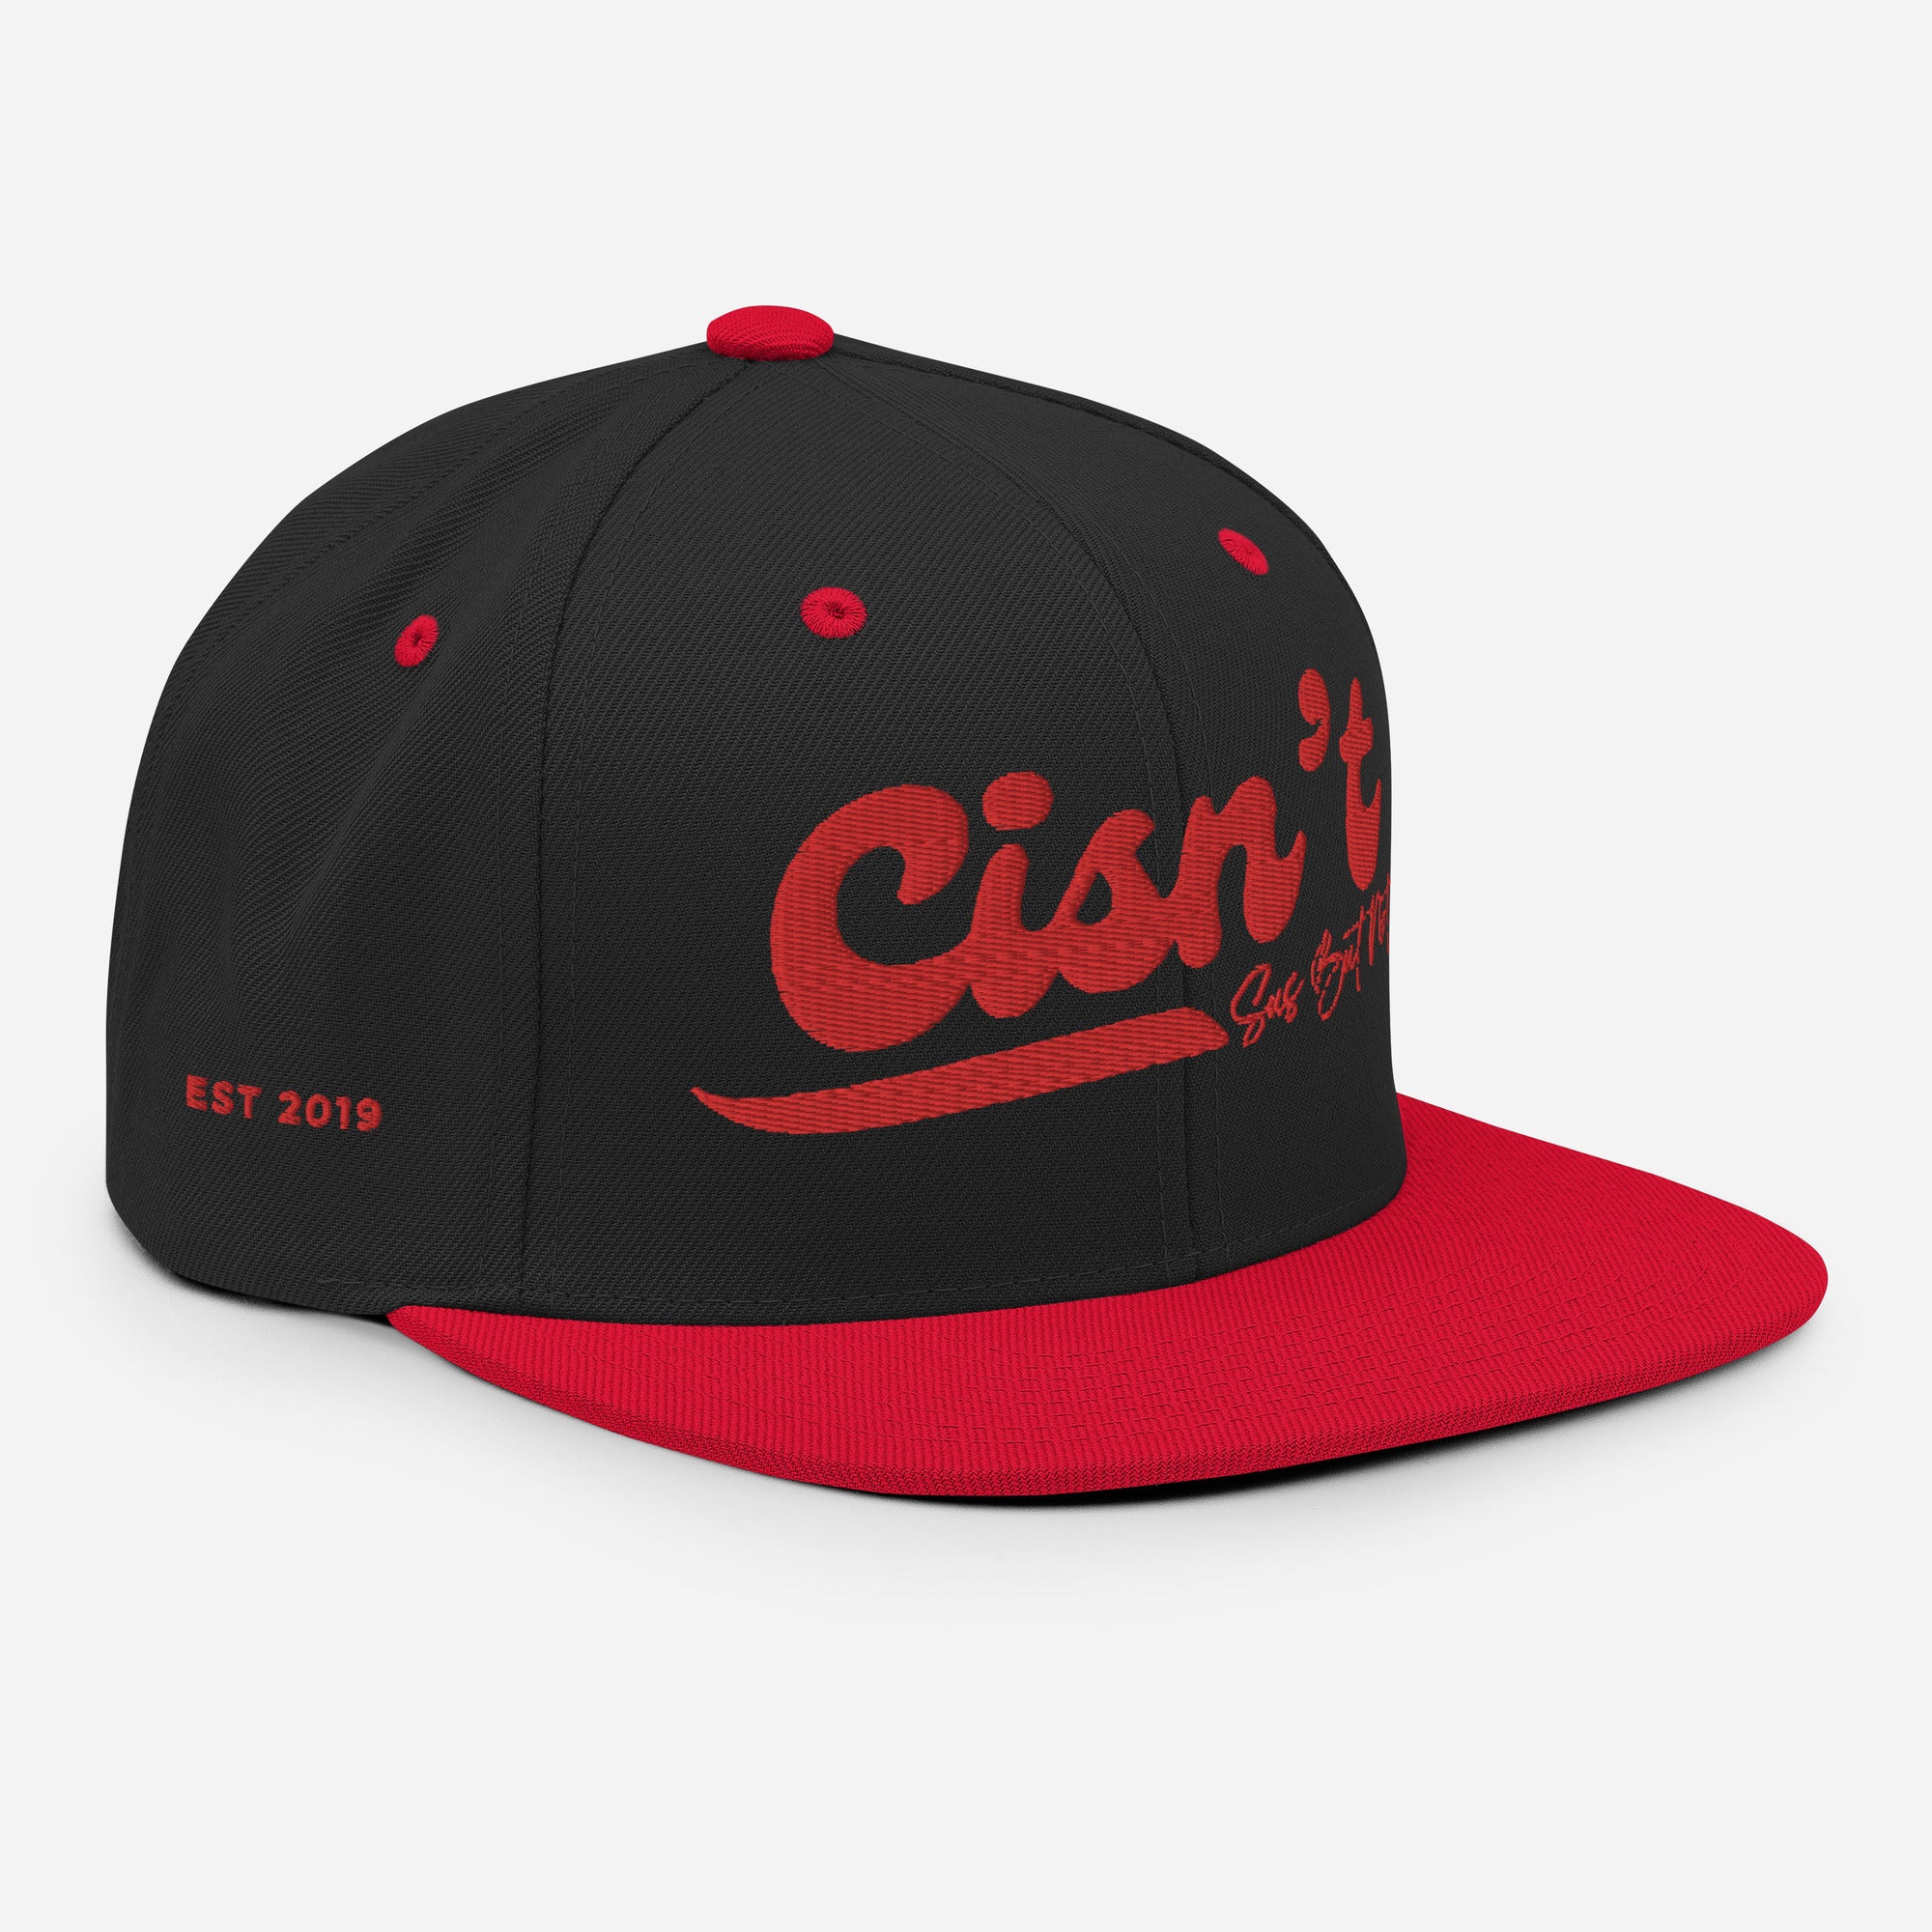 Cisn't Racin' Red Edition Snapback Hat